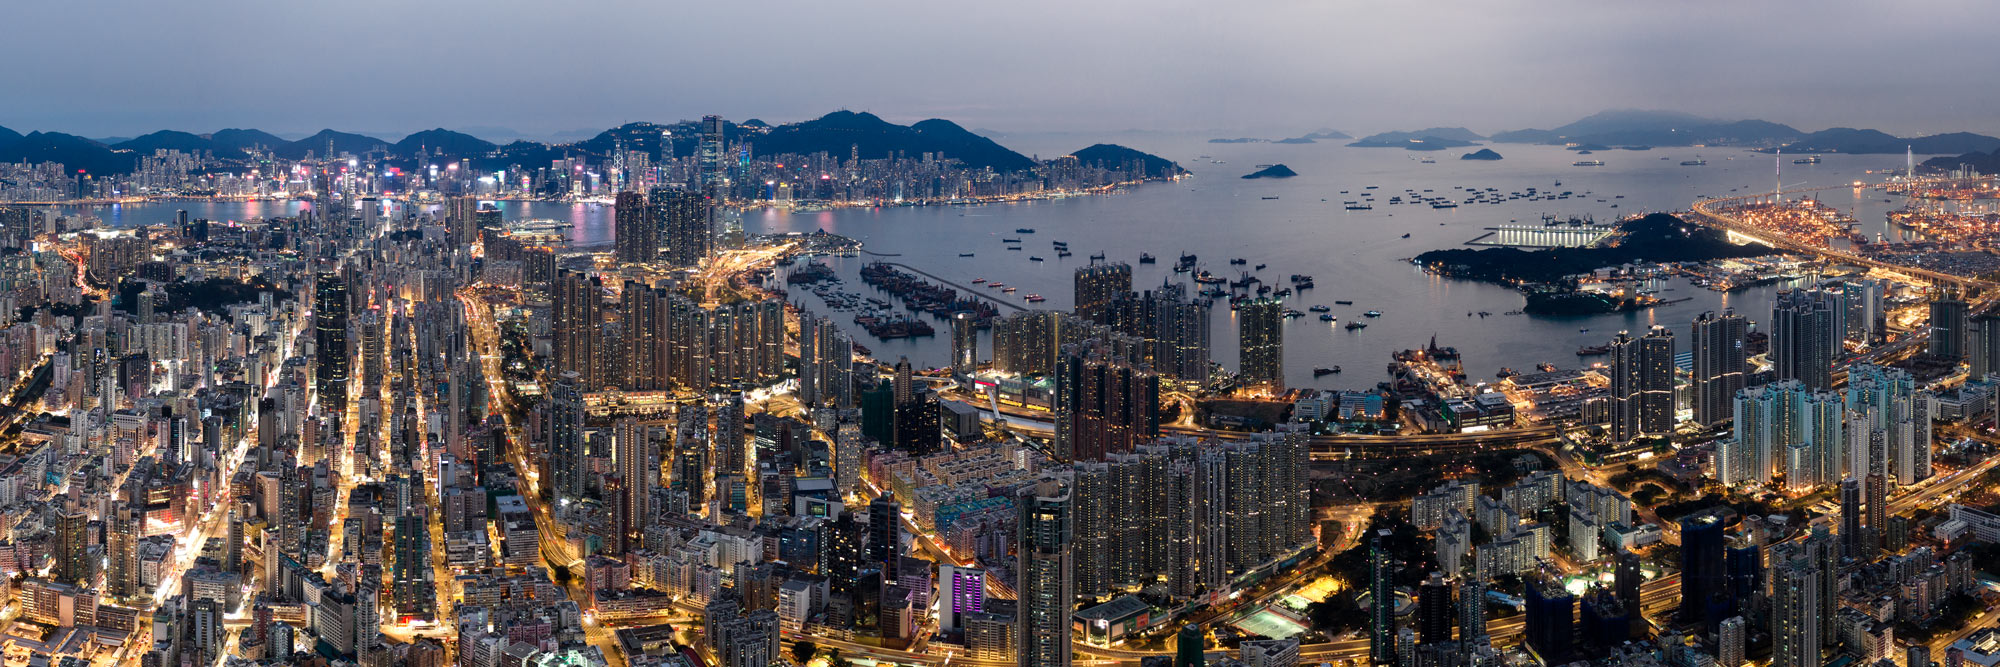 Kowloon panoramic cityscape